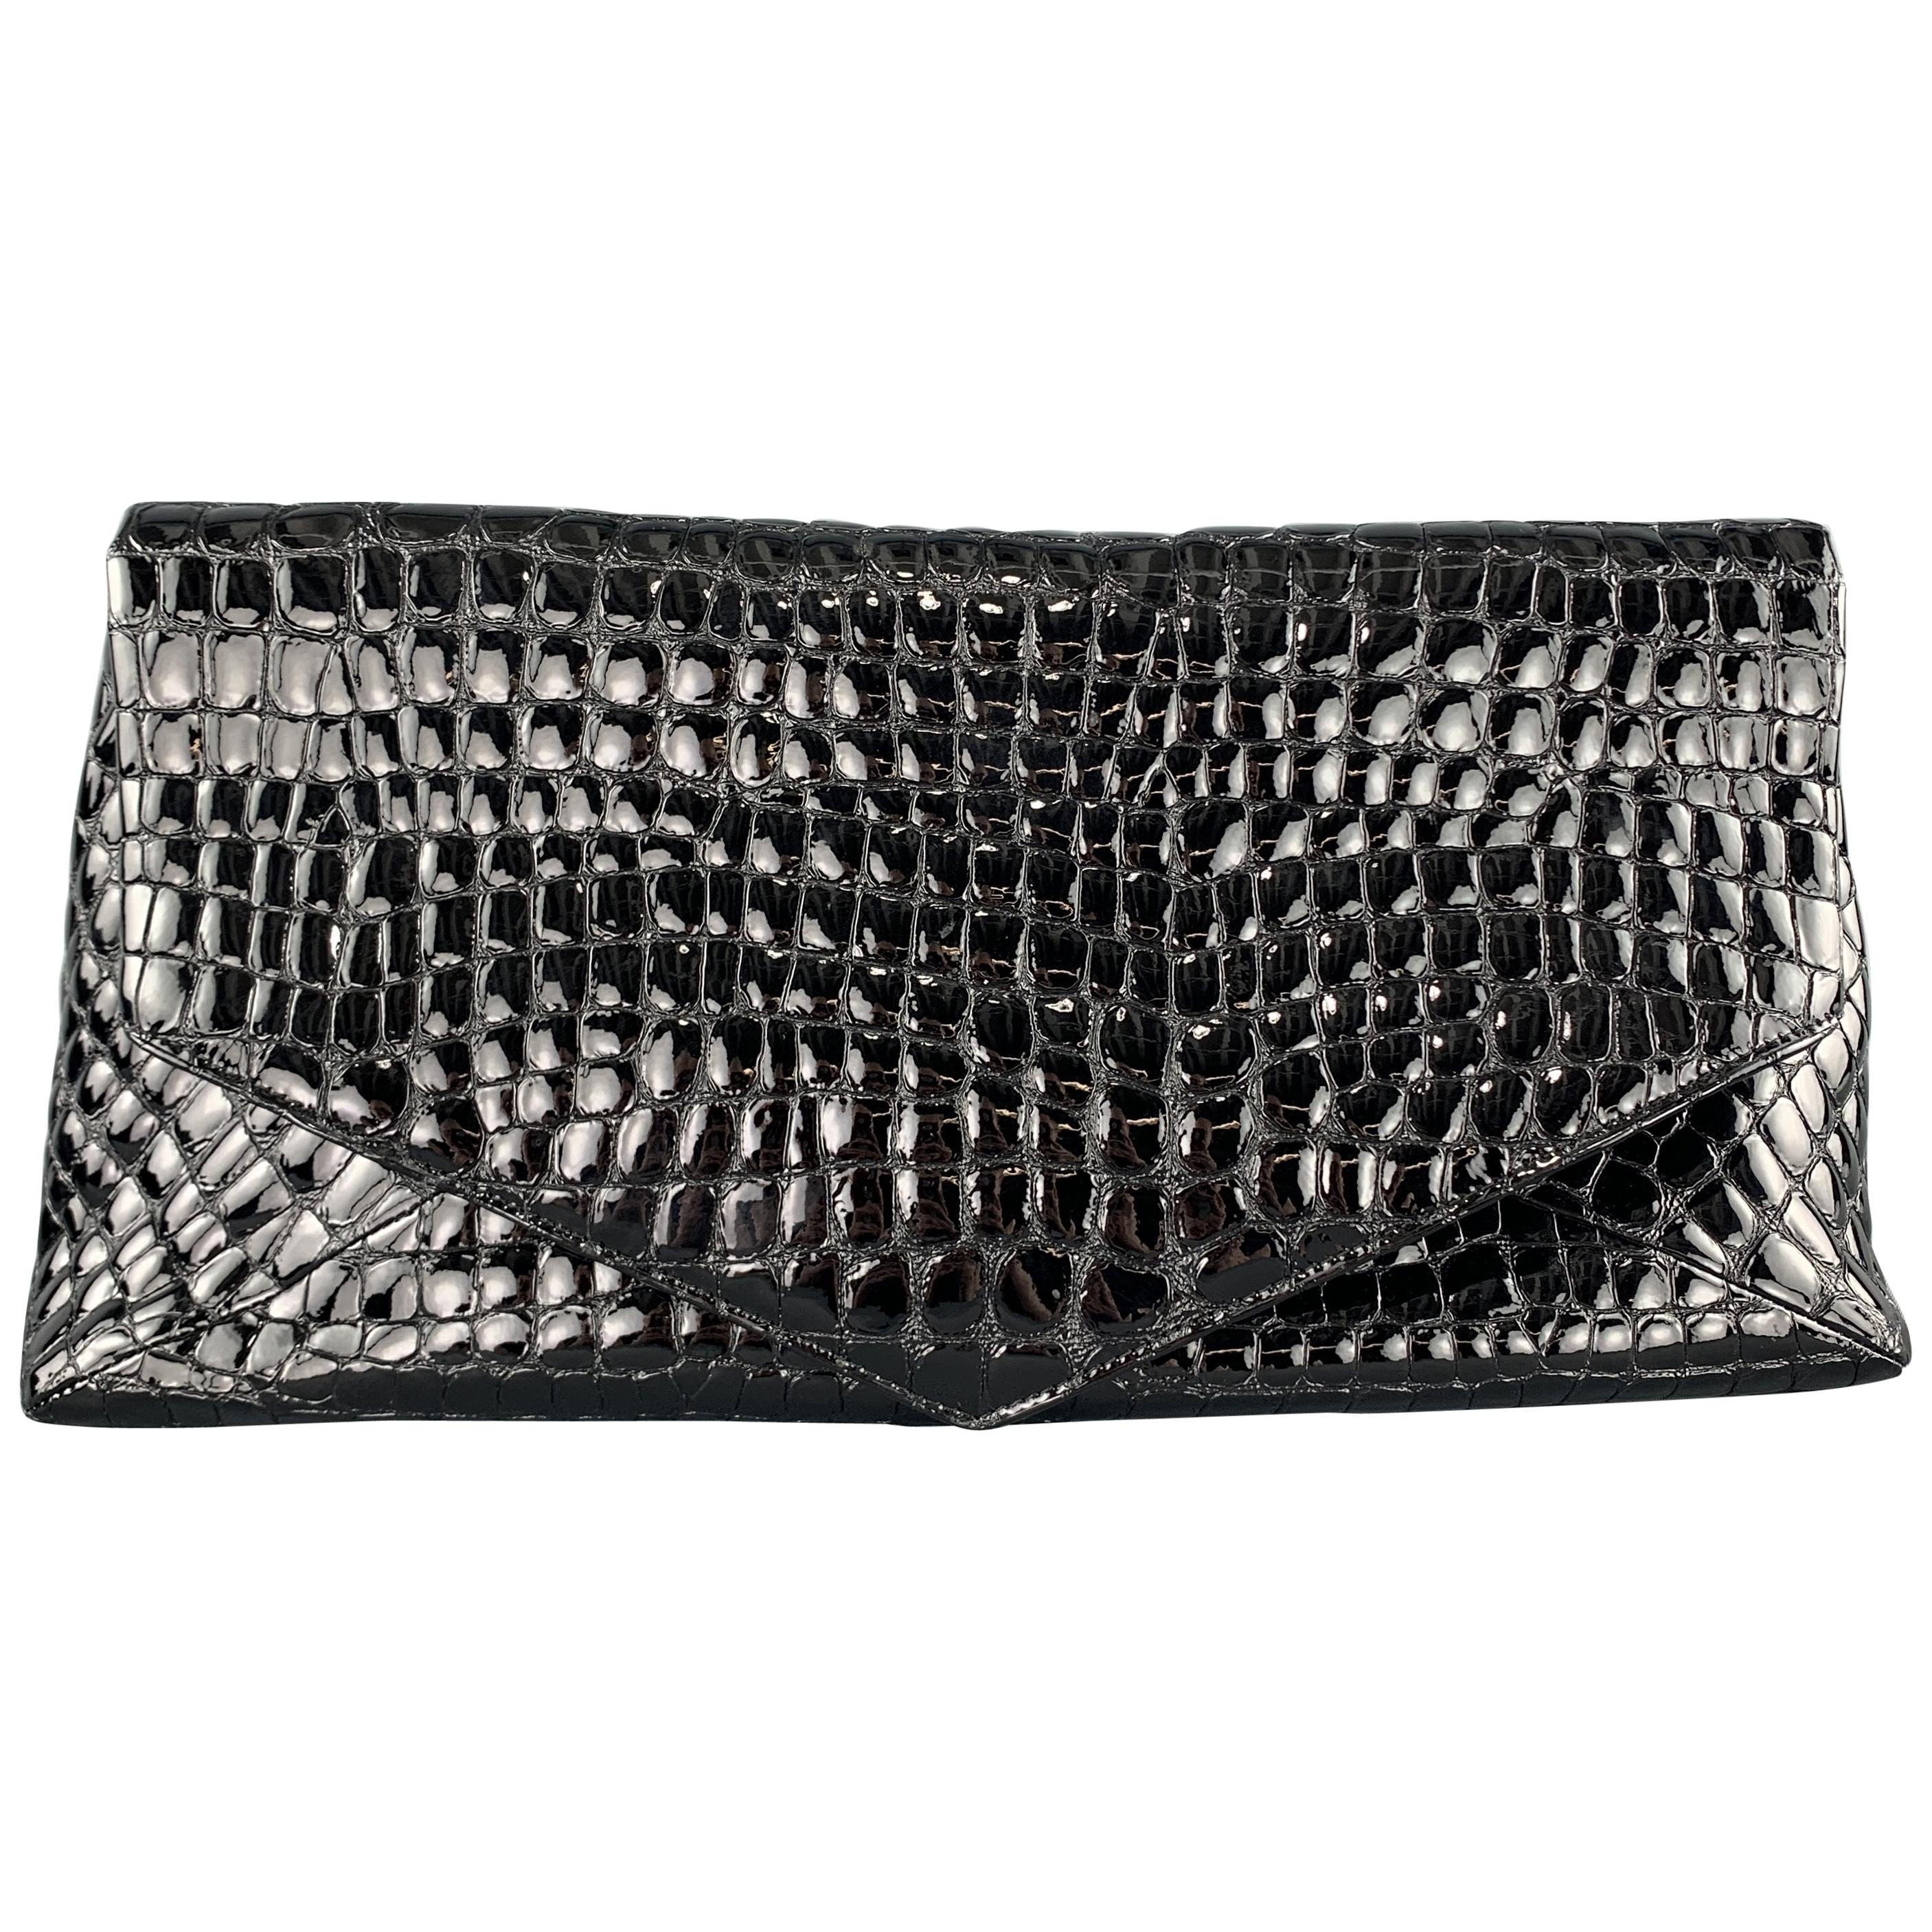 DRIES VAN NOTEN Black Crocodile Embossed Patent Leather Clutch Bag